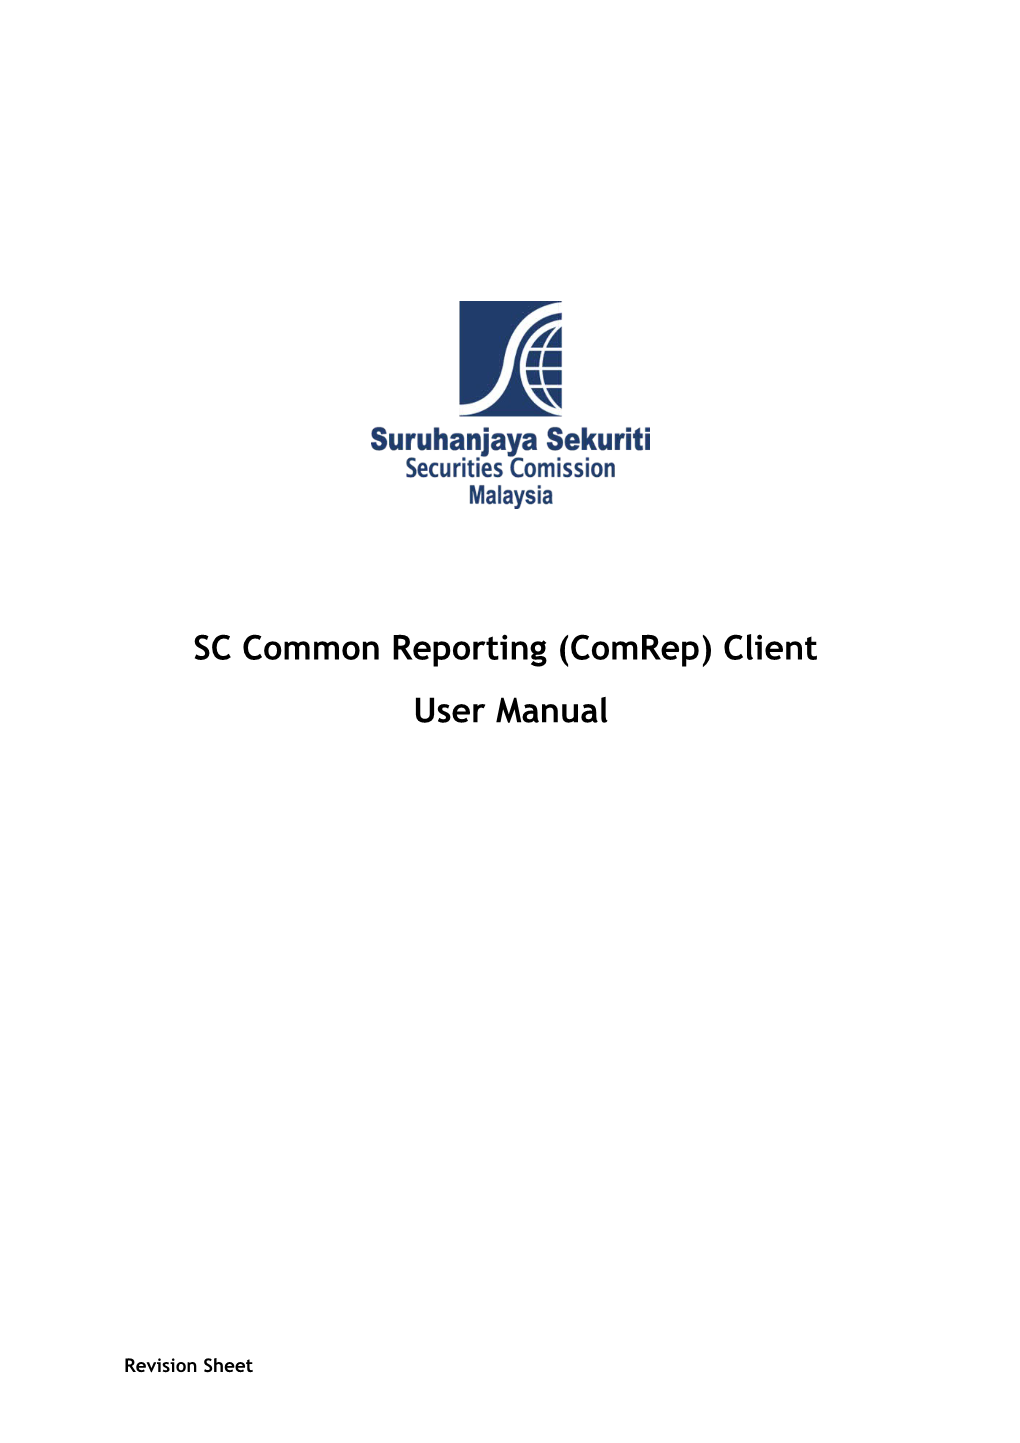 SC Common Reporting (Comrep)Client